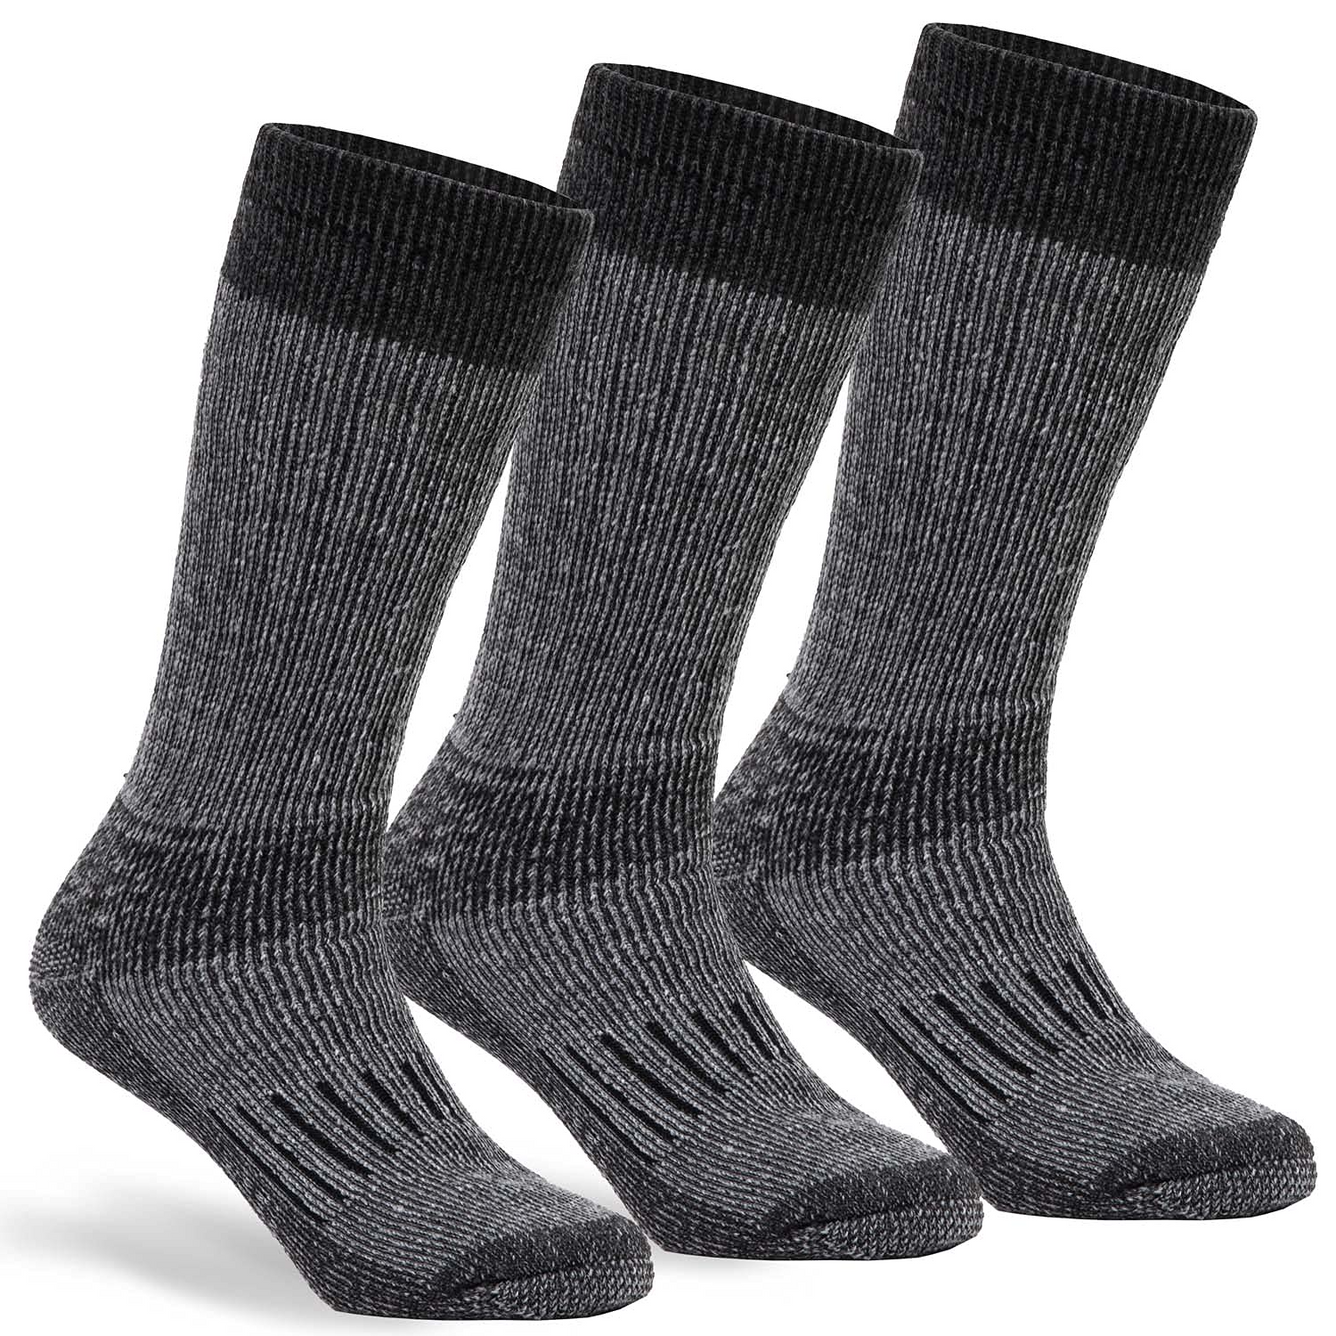 Cozia Thermal Wool Socks